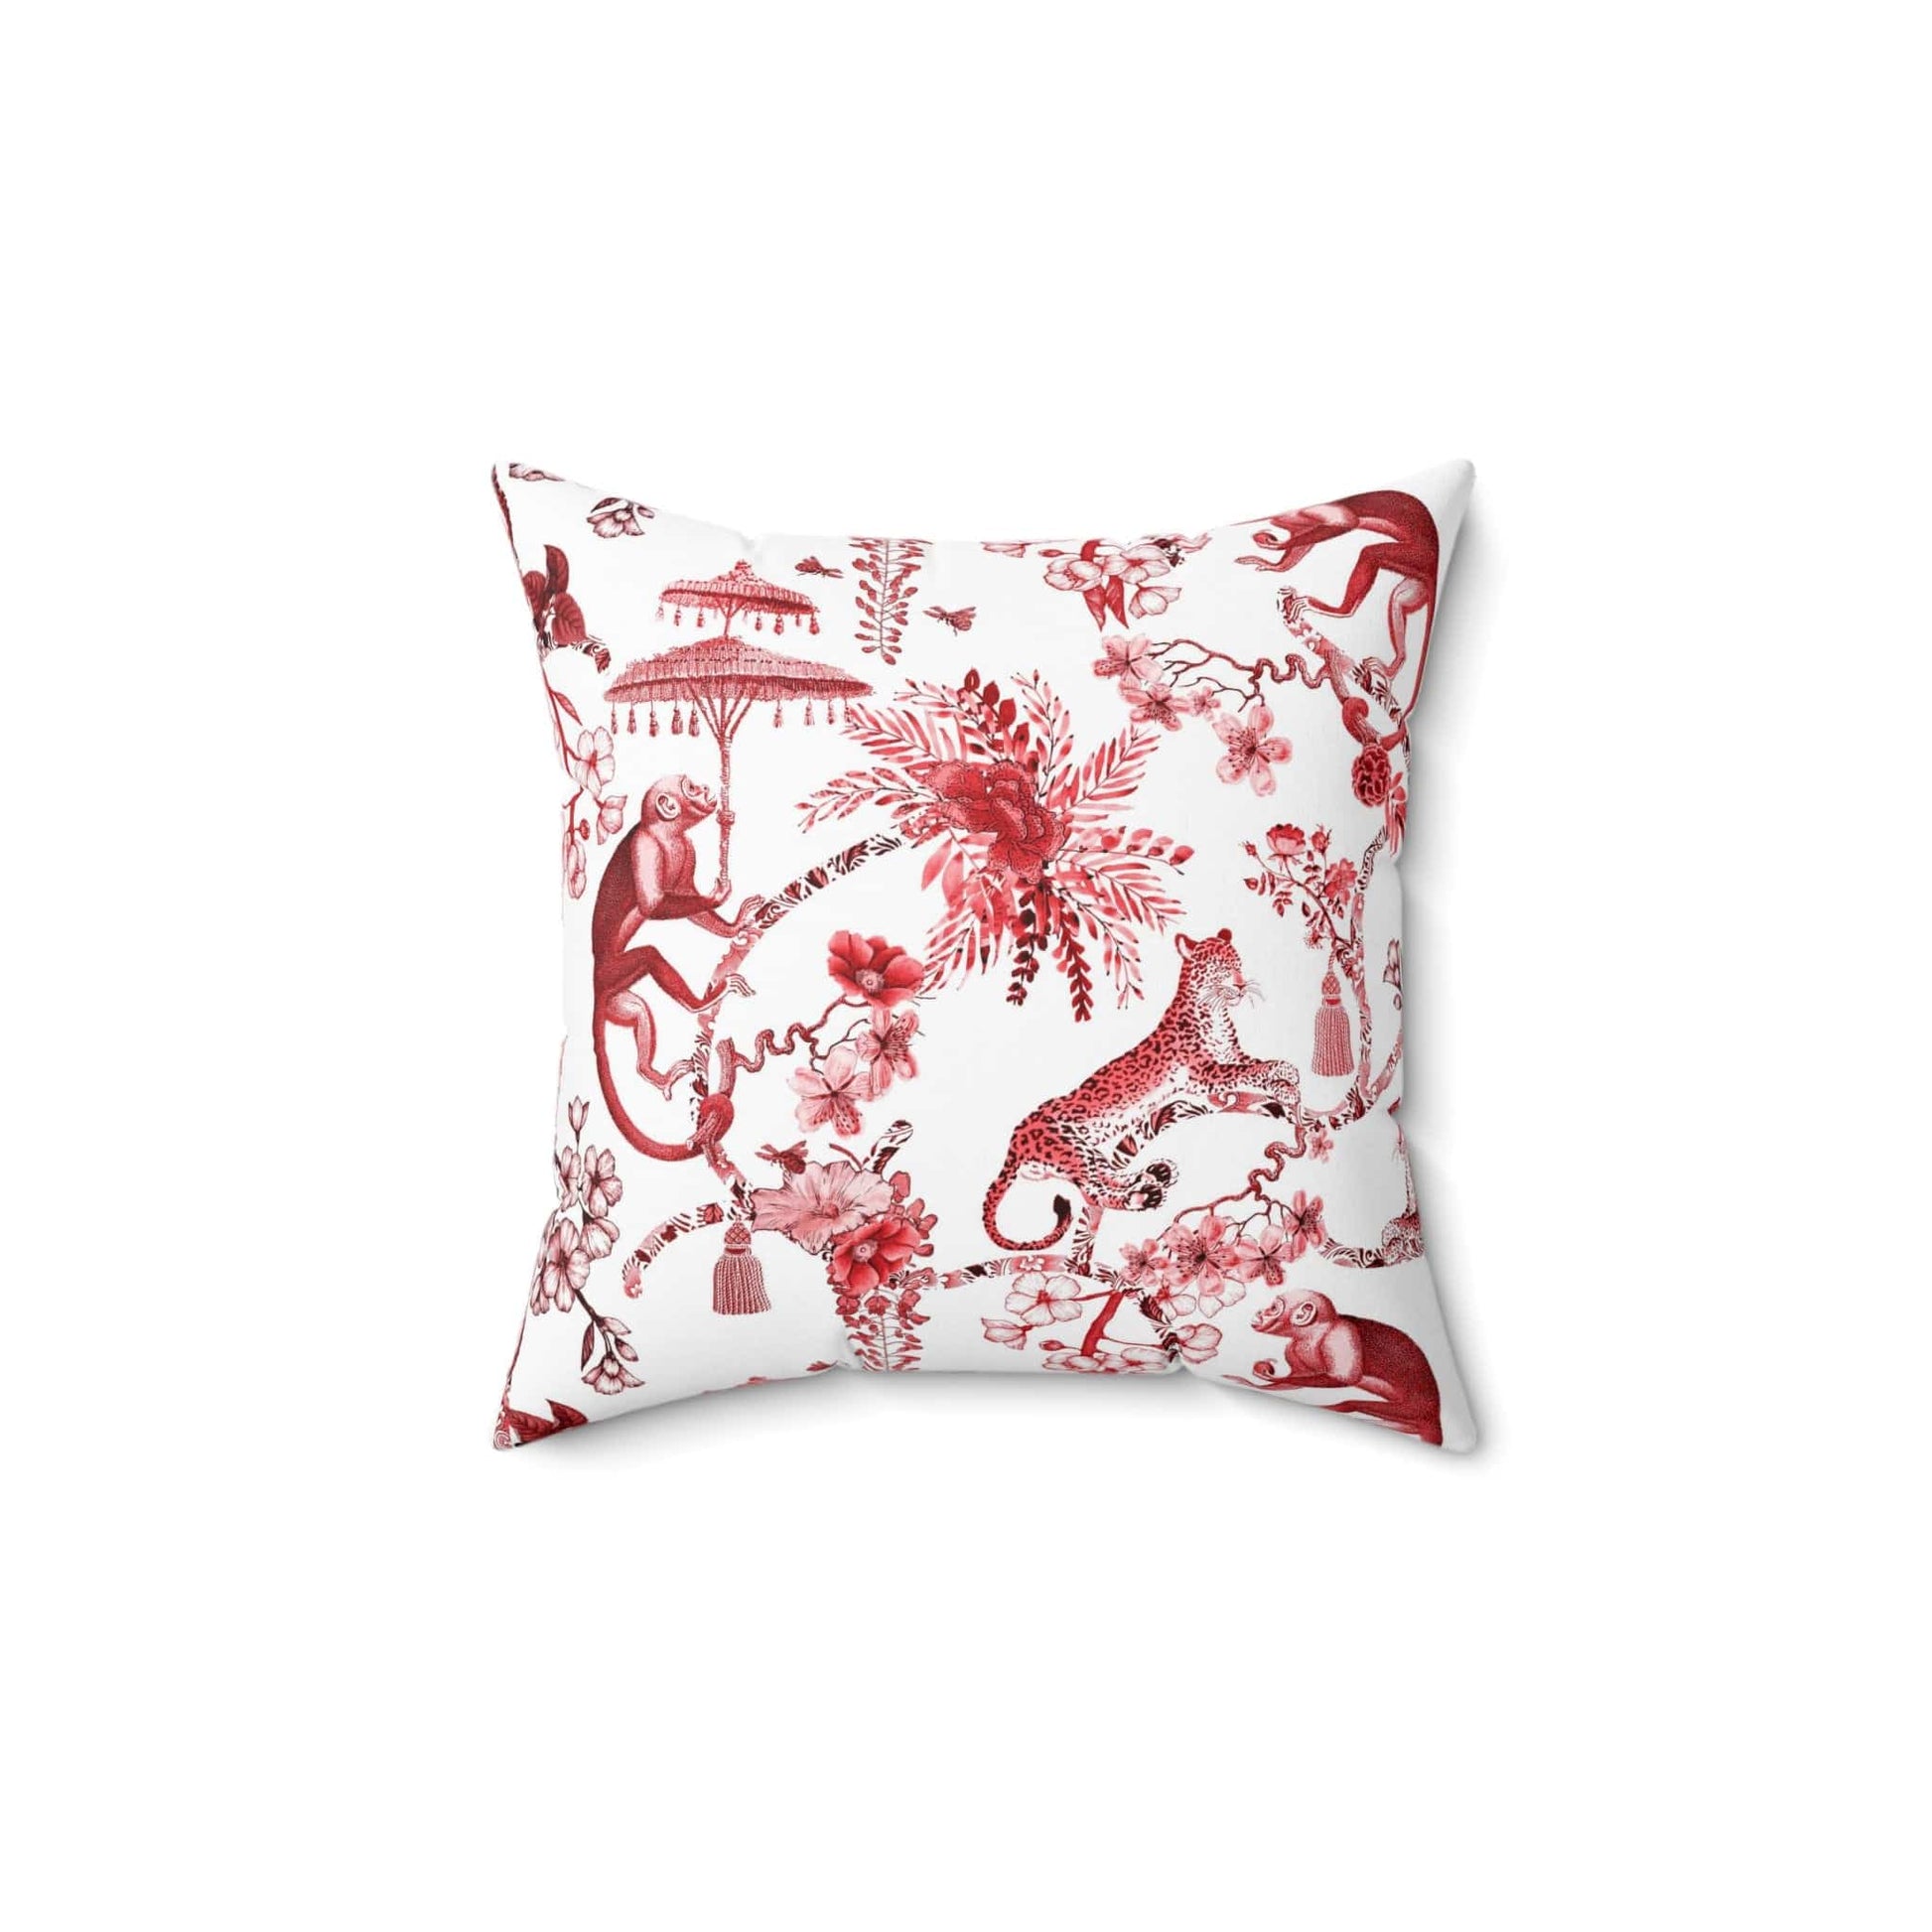 Kate McEnroe New York Chinoiserie Jungle Botanical Toile Throw Pillow, Red, White Chinoiserie Floral Cushions, Country Farmhouse Decor - 131382623 Throw Pillows